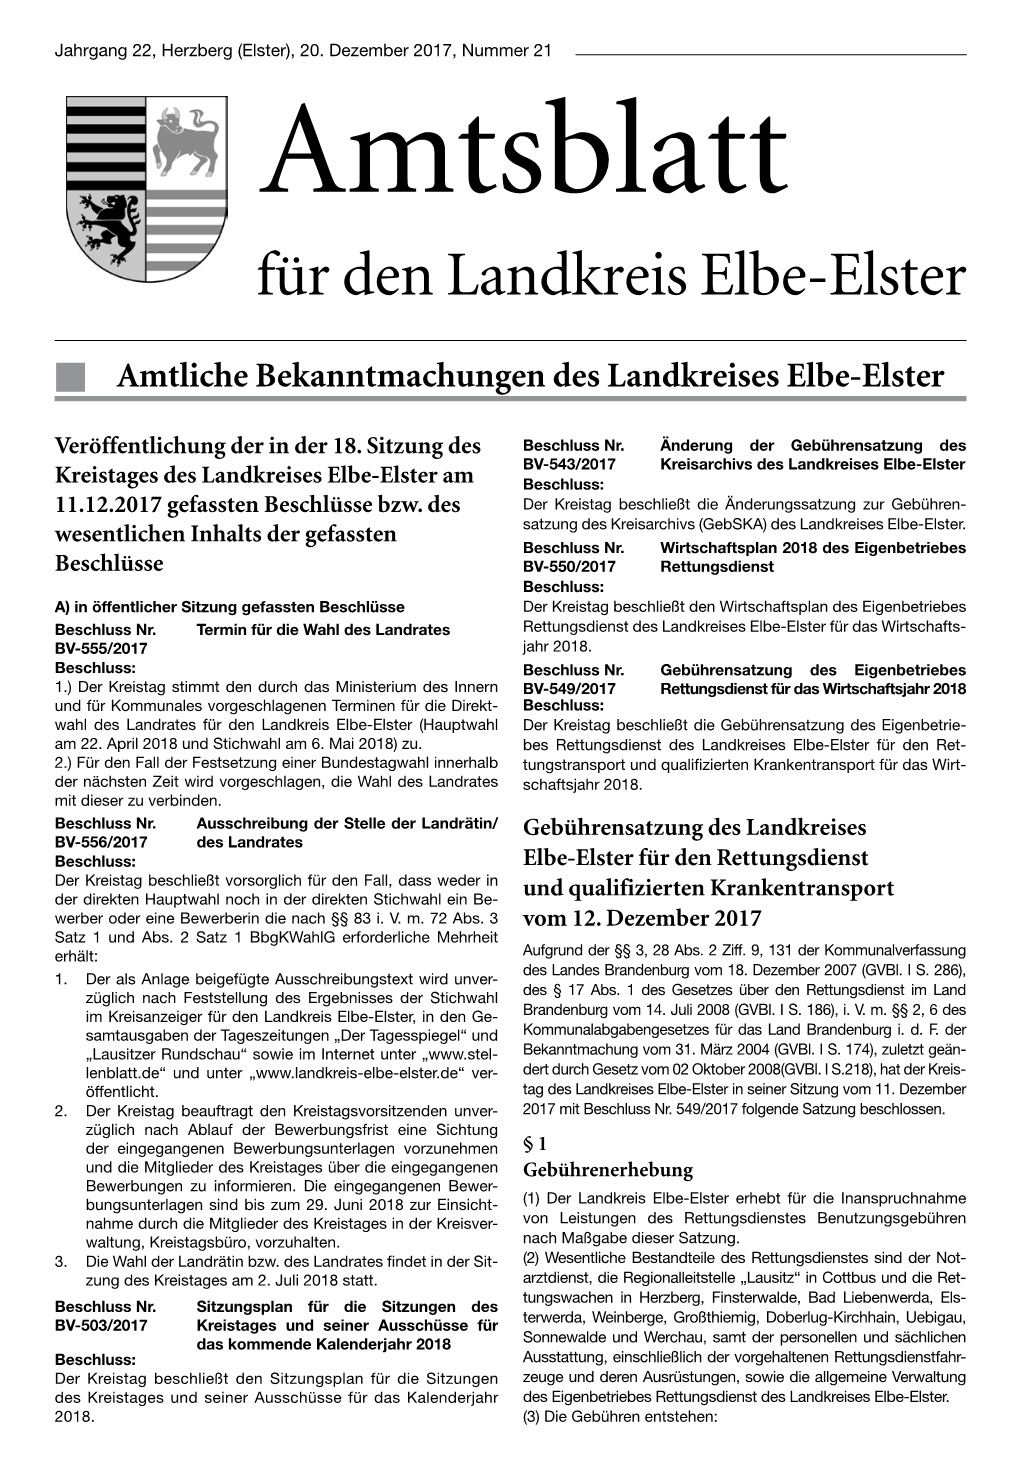 Amtsblatt EE 21-2017